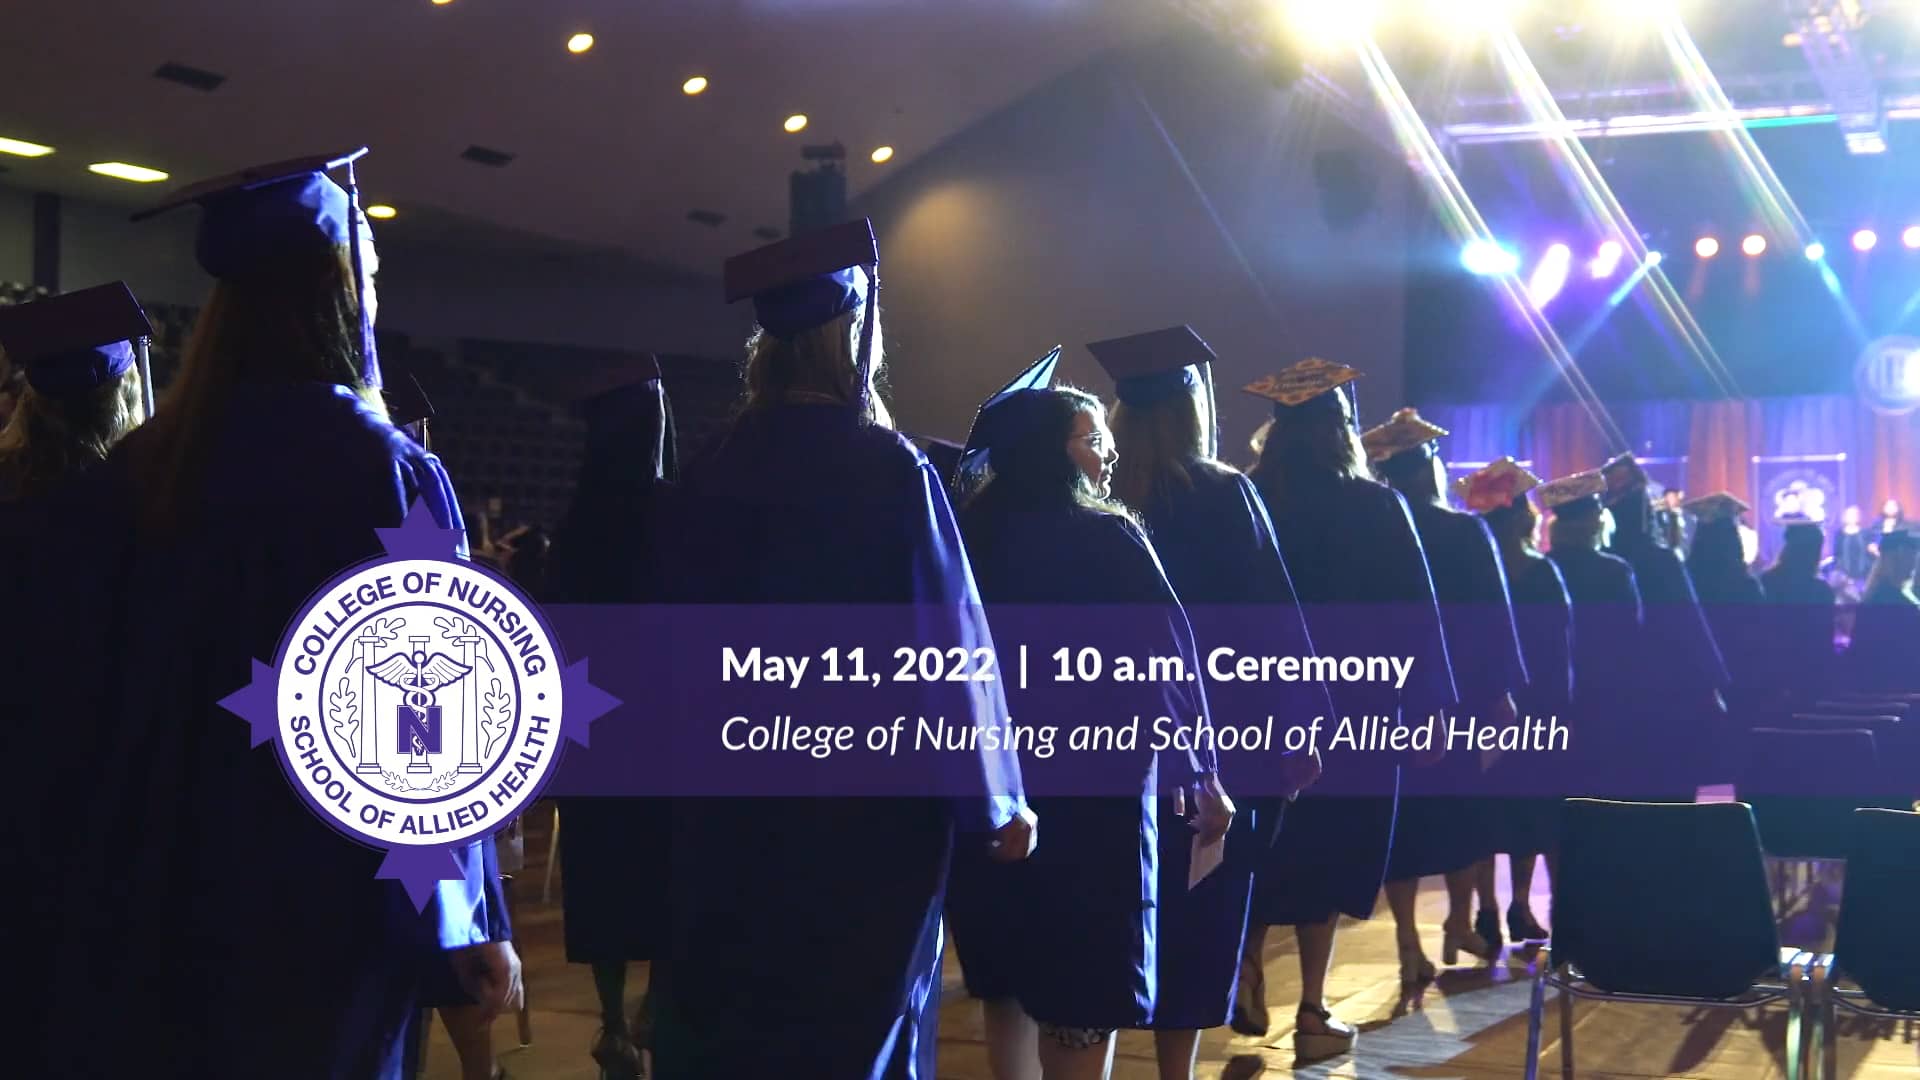 2022 NSU Graduation Ceremony Day 1 10 a.m. College of Nursing and